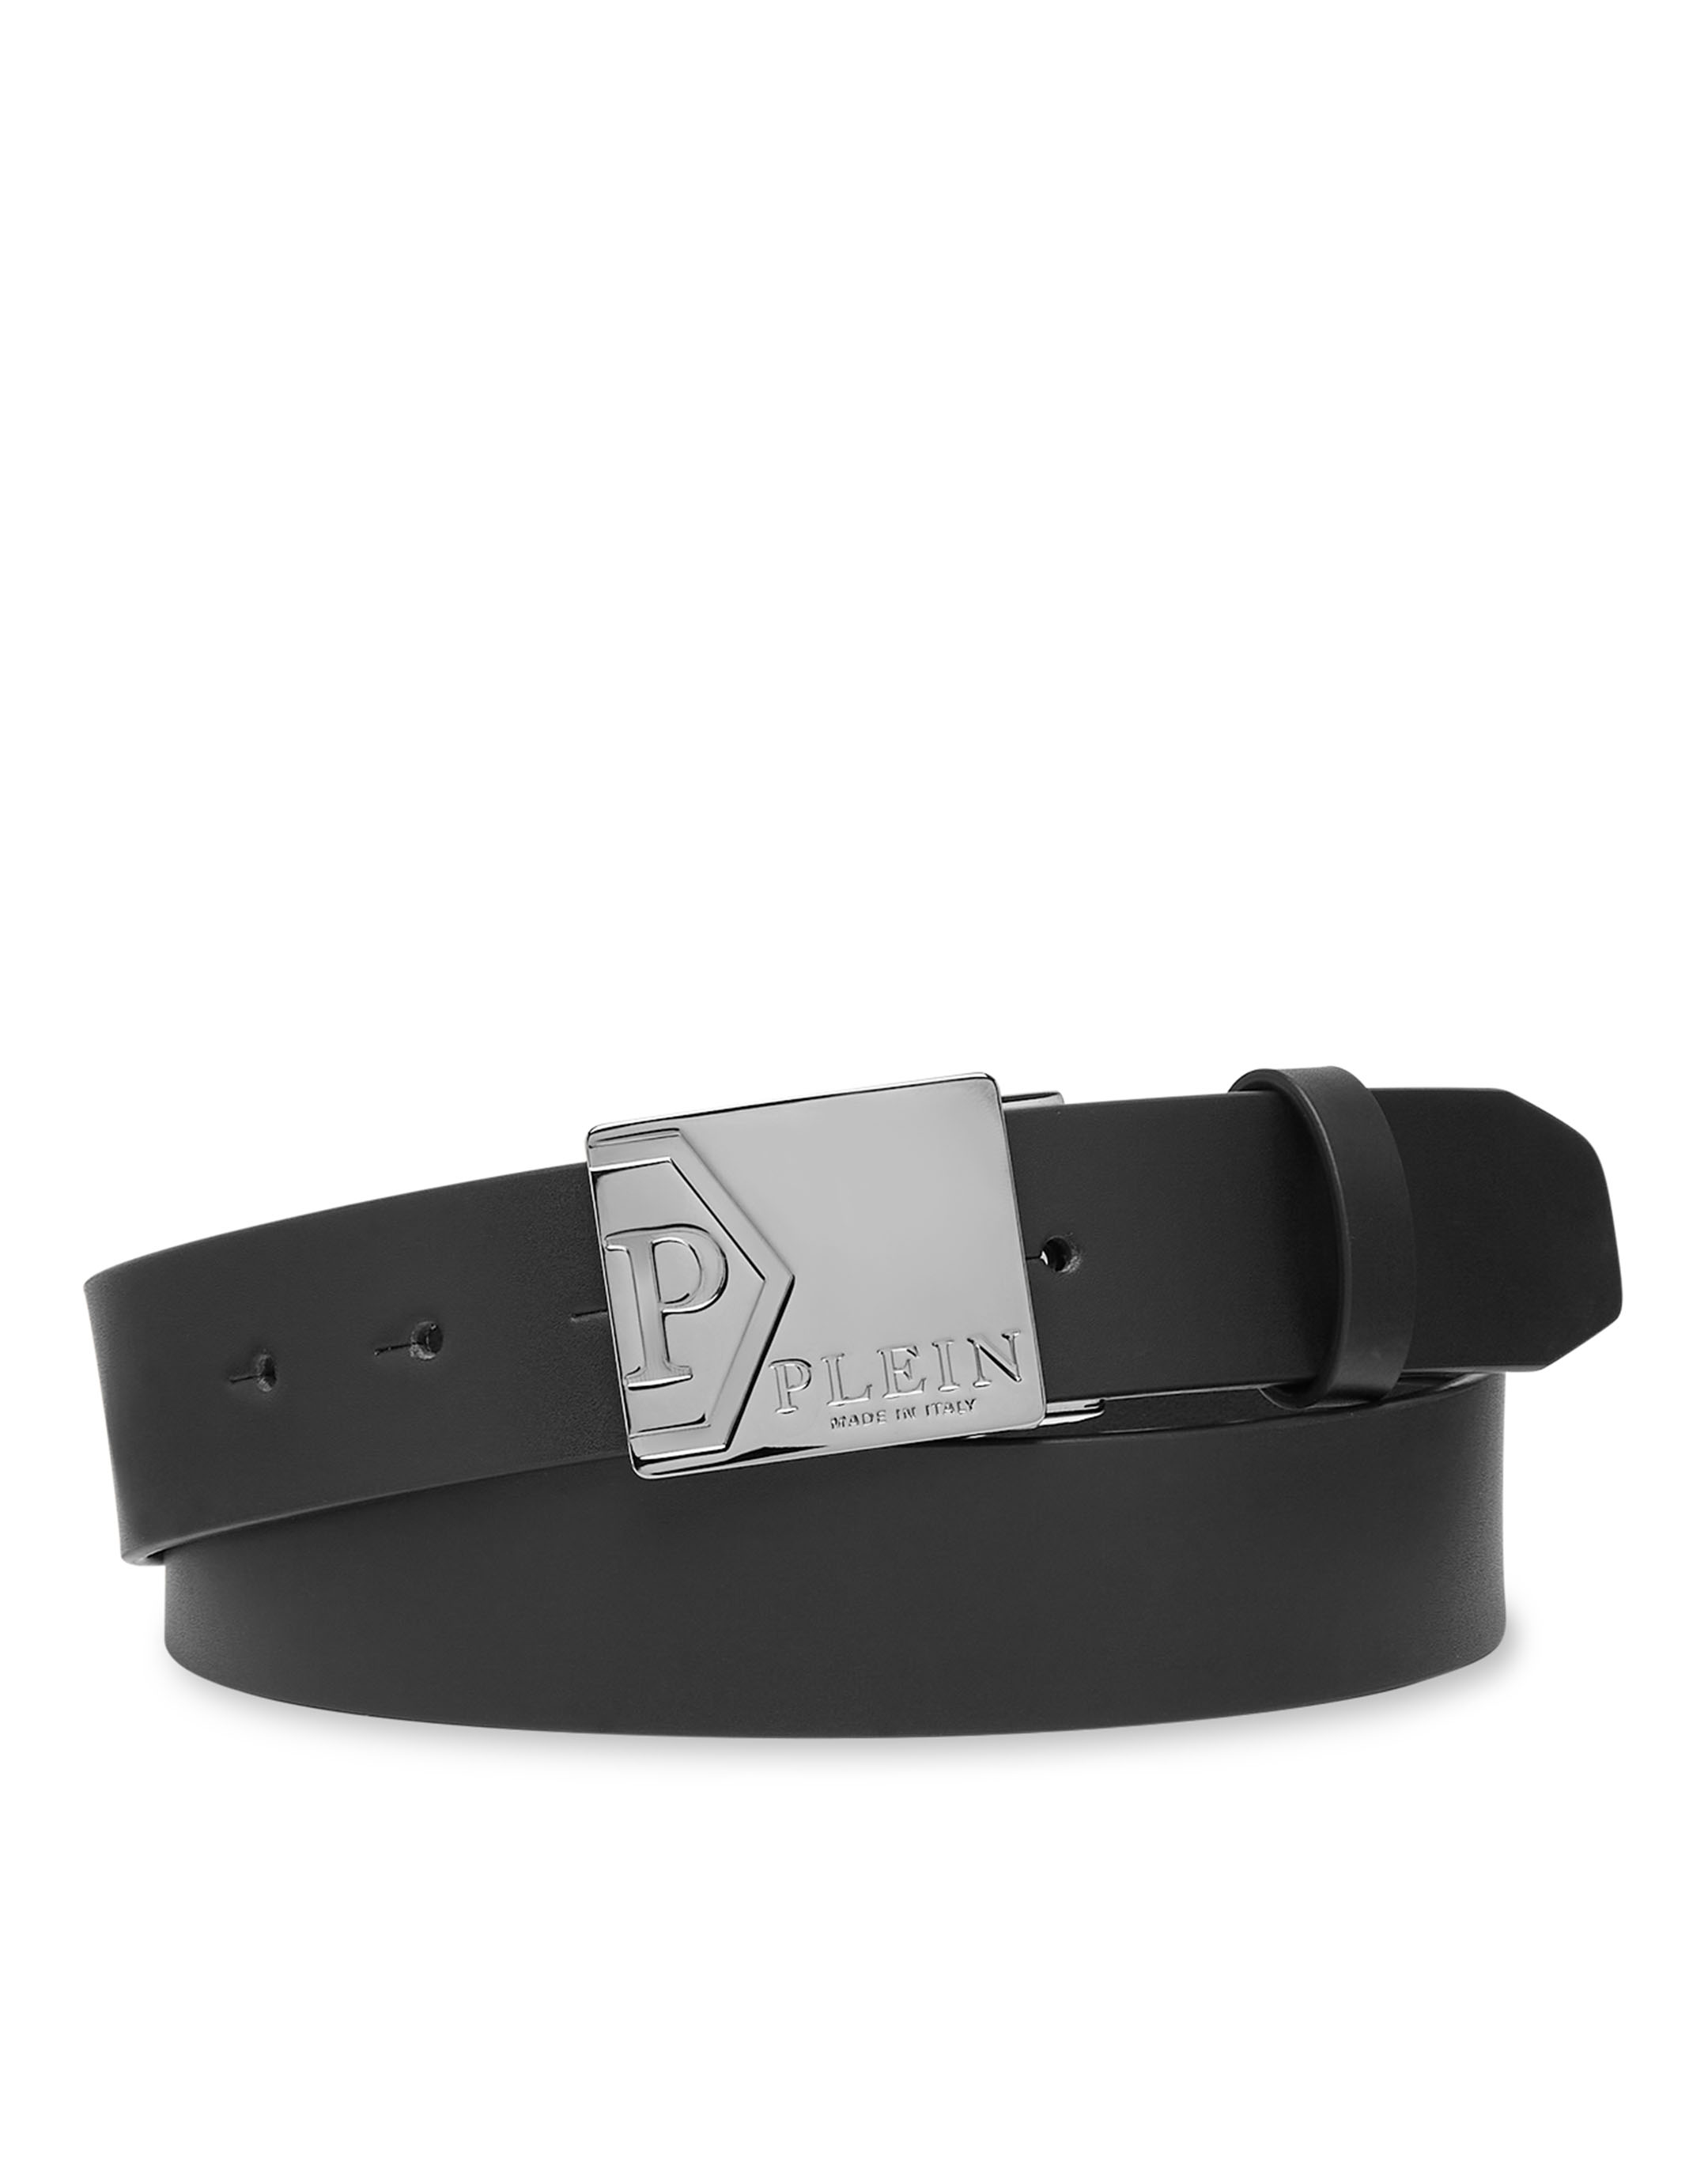 Leather Belt Iconic Plein | Philipp Plein Outlet